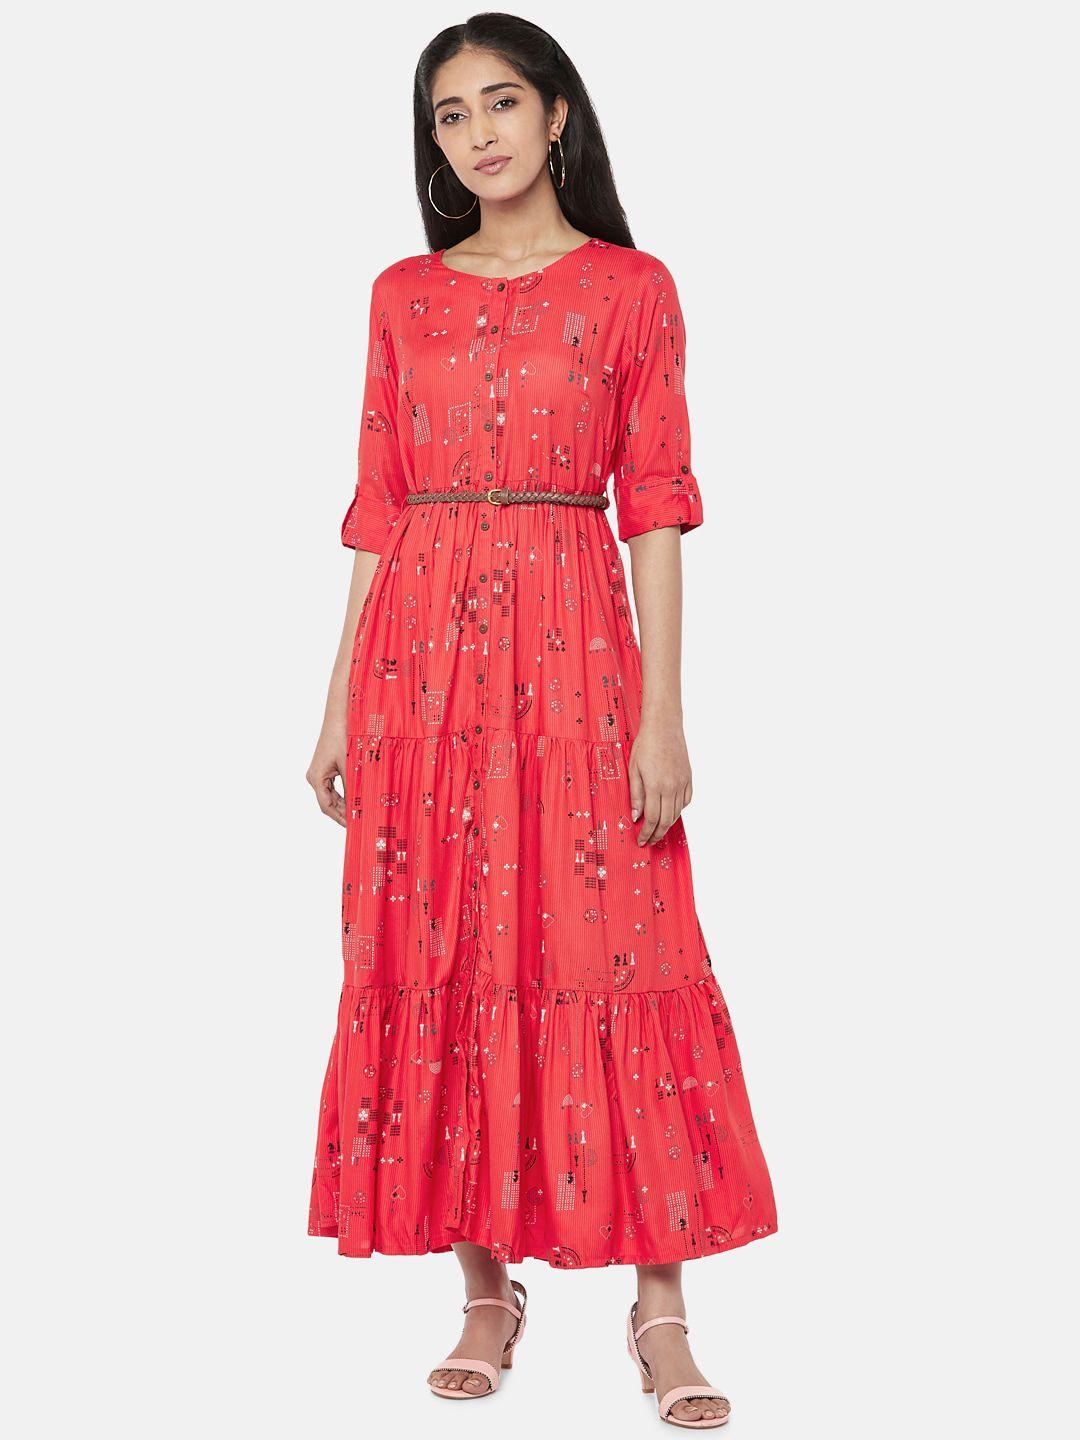 akkriti-by-pantaloons-women-red-printed-maxi-dress